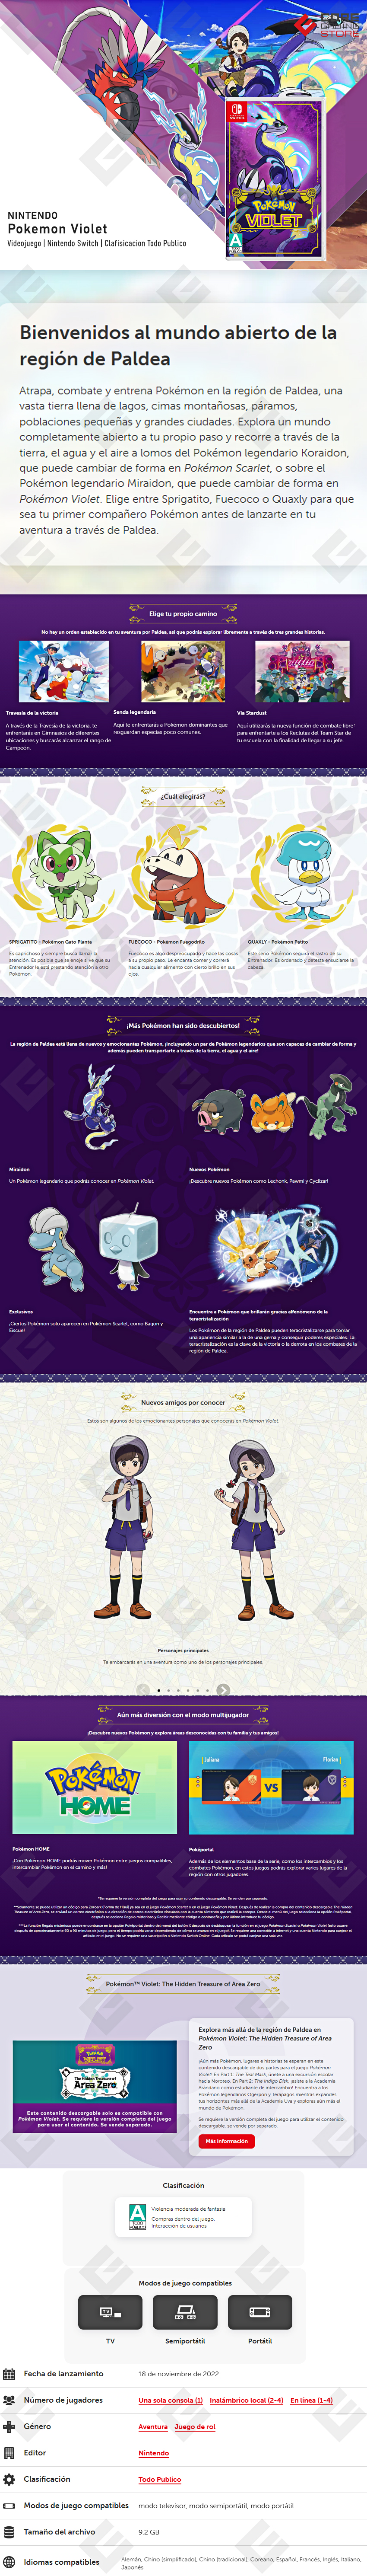 Videojuego Pokémon Violet - Standard Edition para Nintendo Switch - HACPALZYA